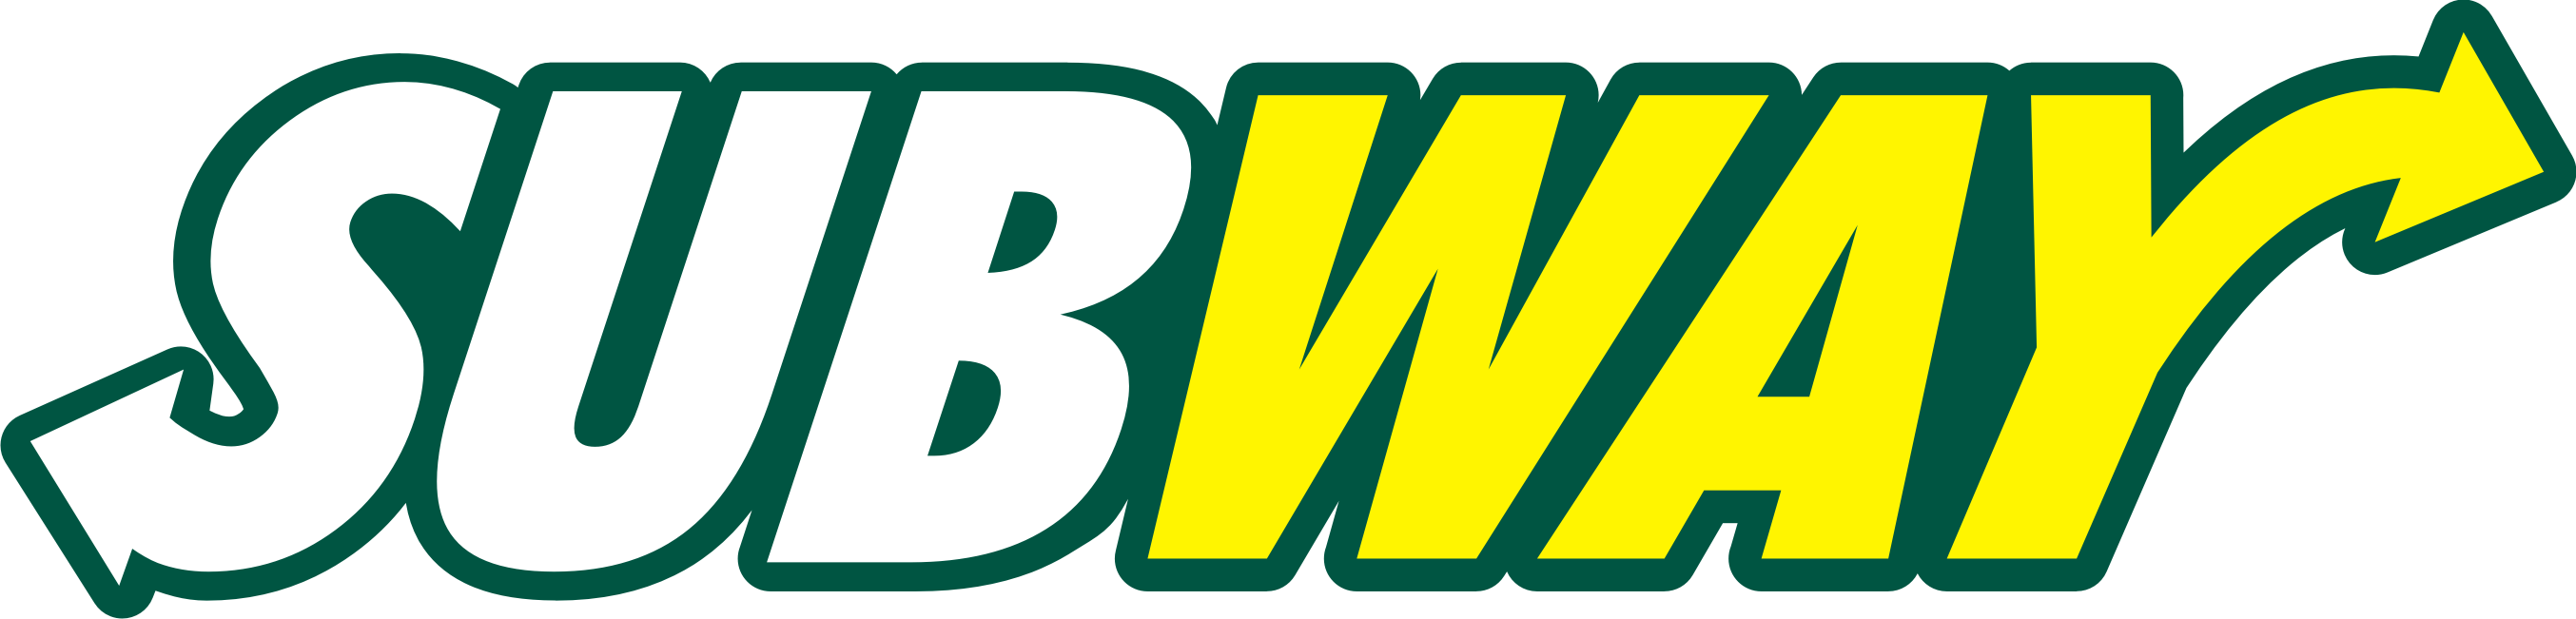 Subway 2018 Logo - Subway Logo. Subway Logo Design Vector Free Download